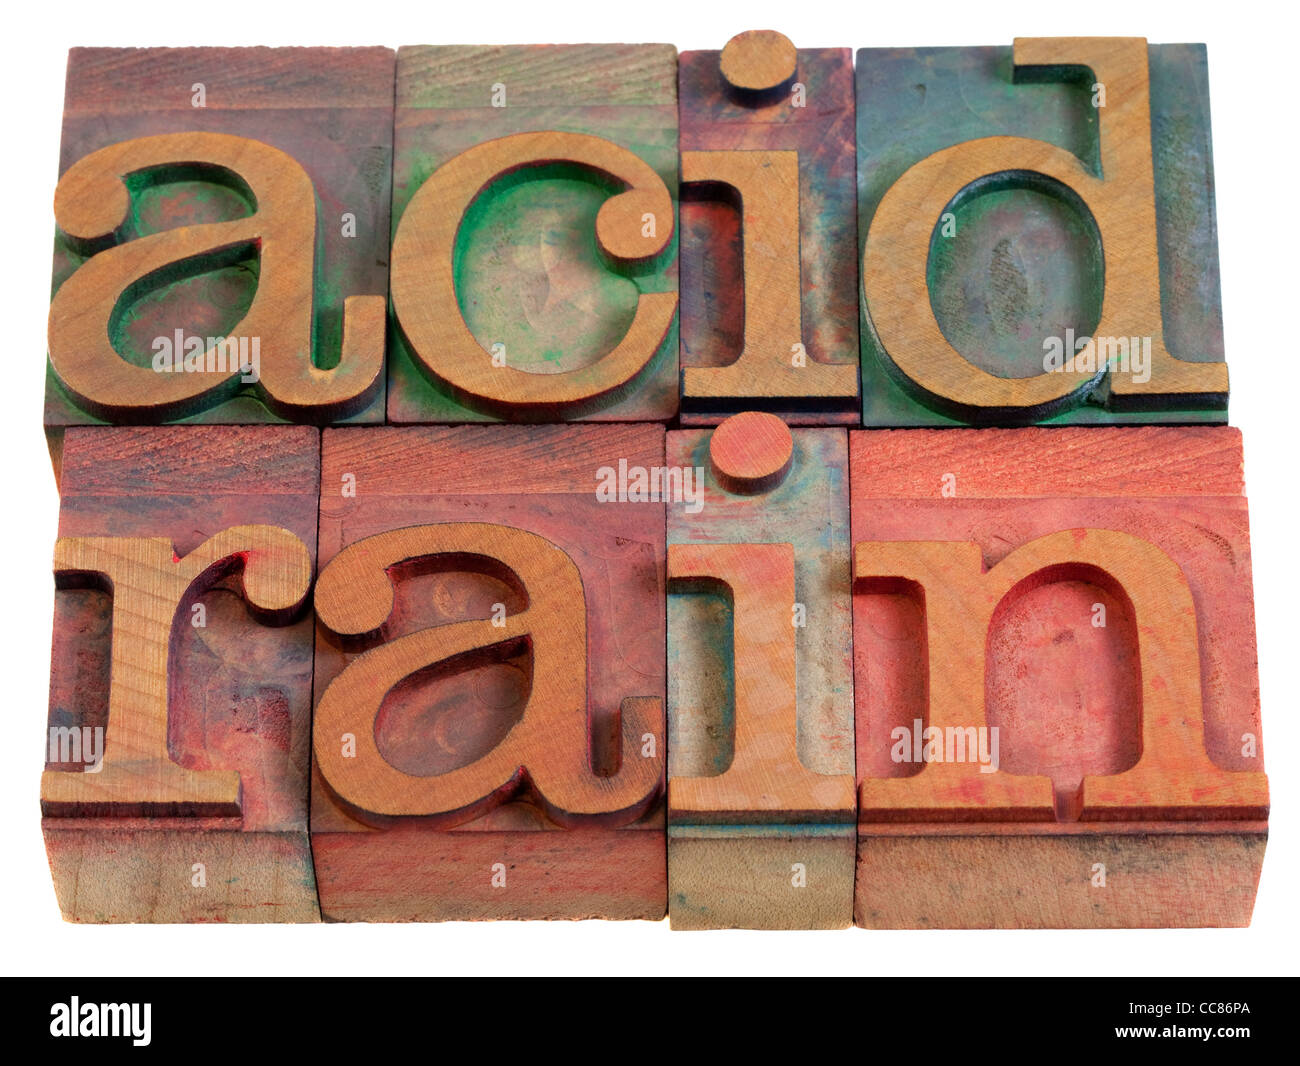 acid rain (atmospheric pollution) - words in vintage wooden letterpress printing blocks Stock Photo